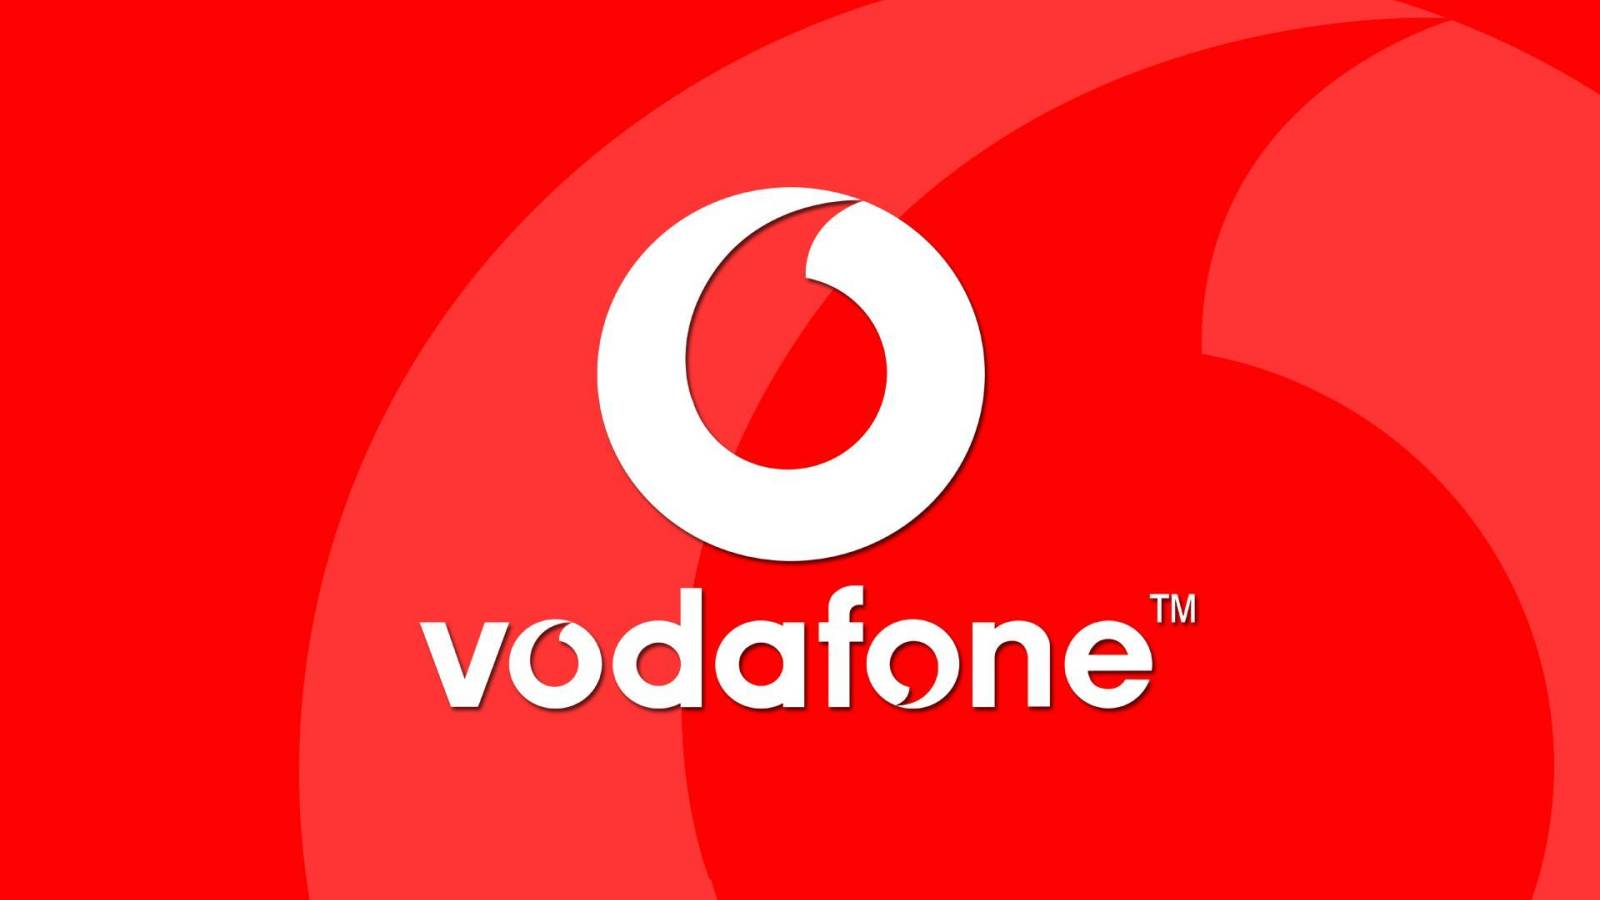 Vodafone central